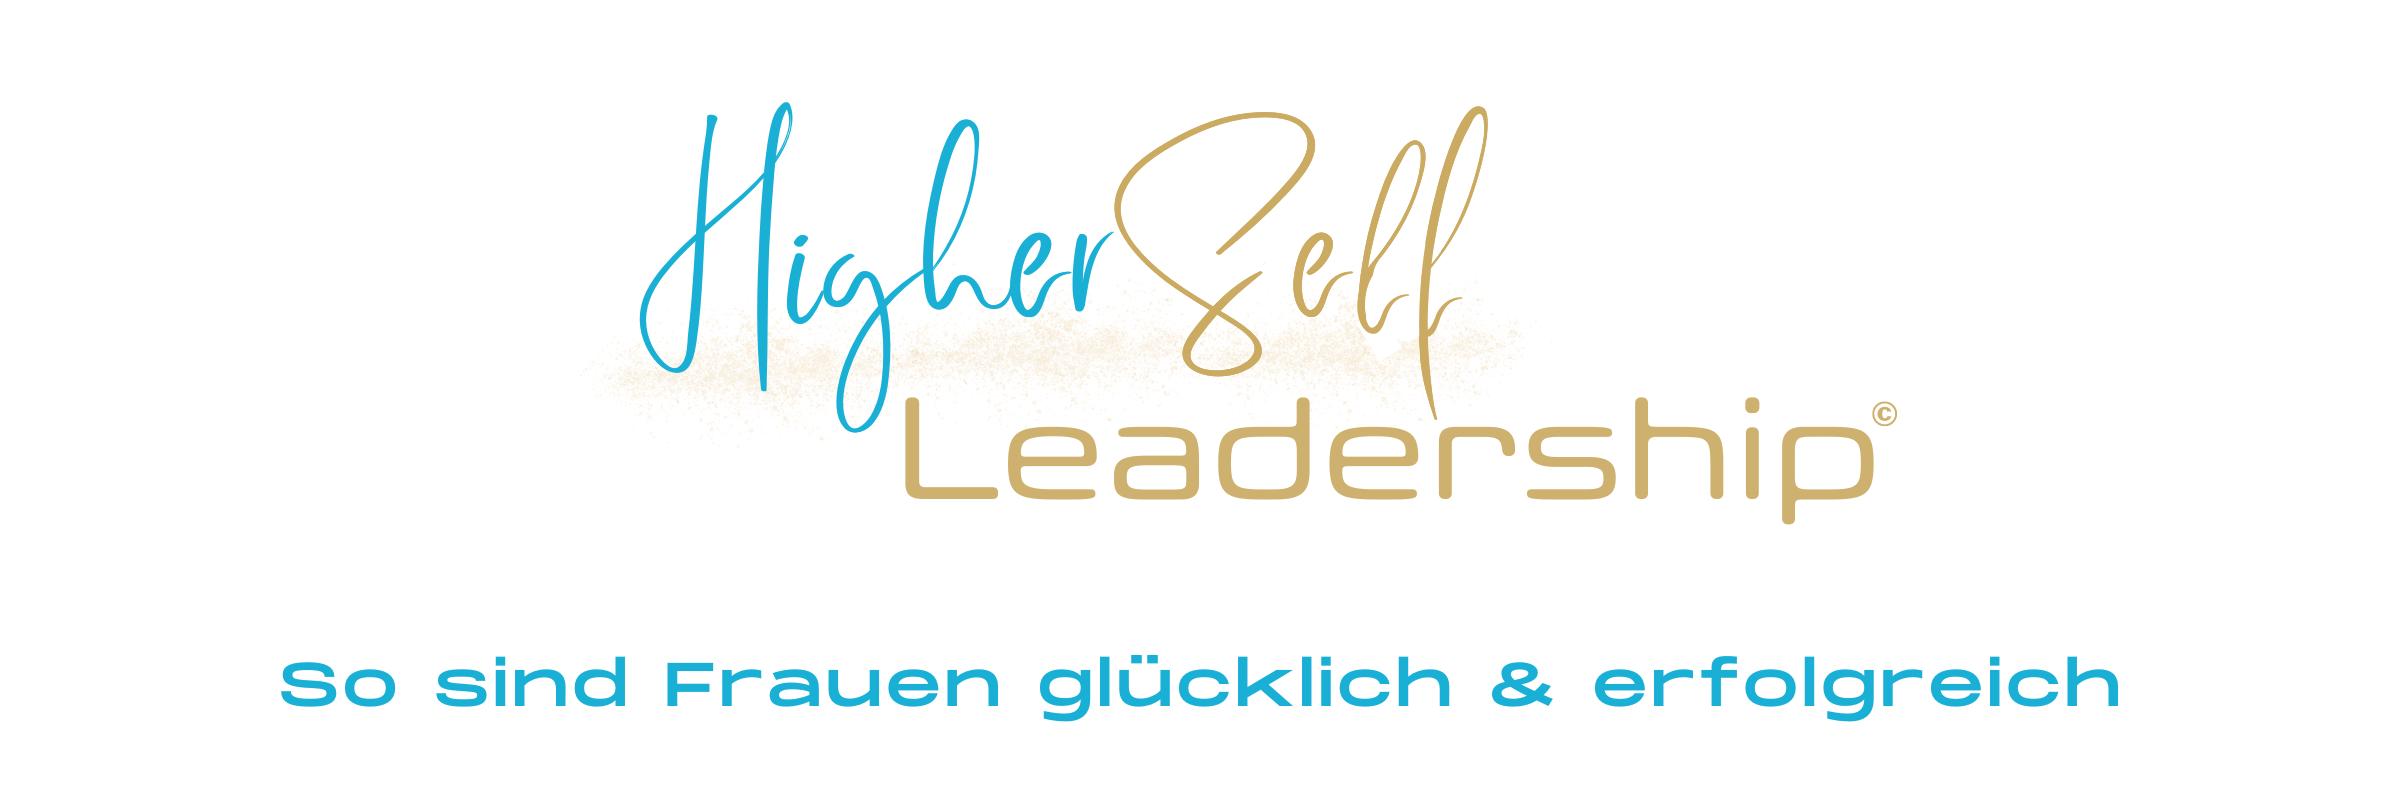 Higher Self Leadership by Dörte Scheffer